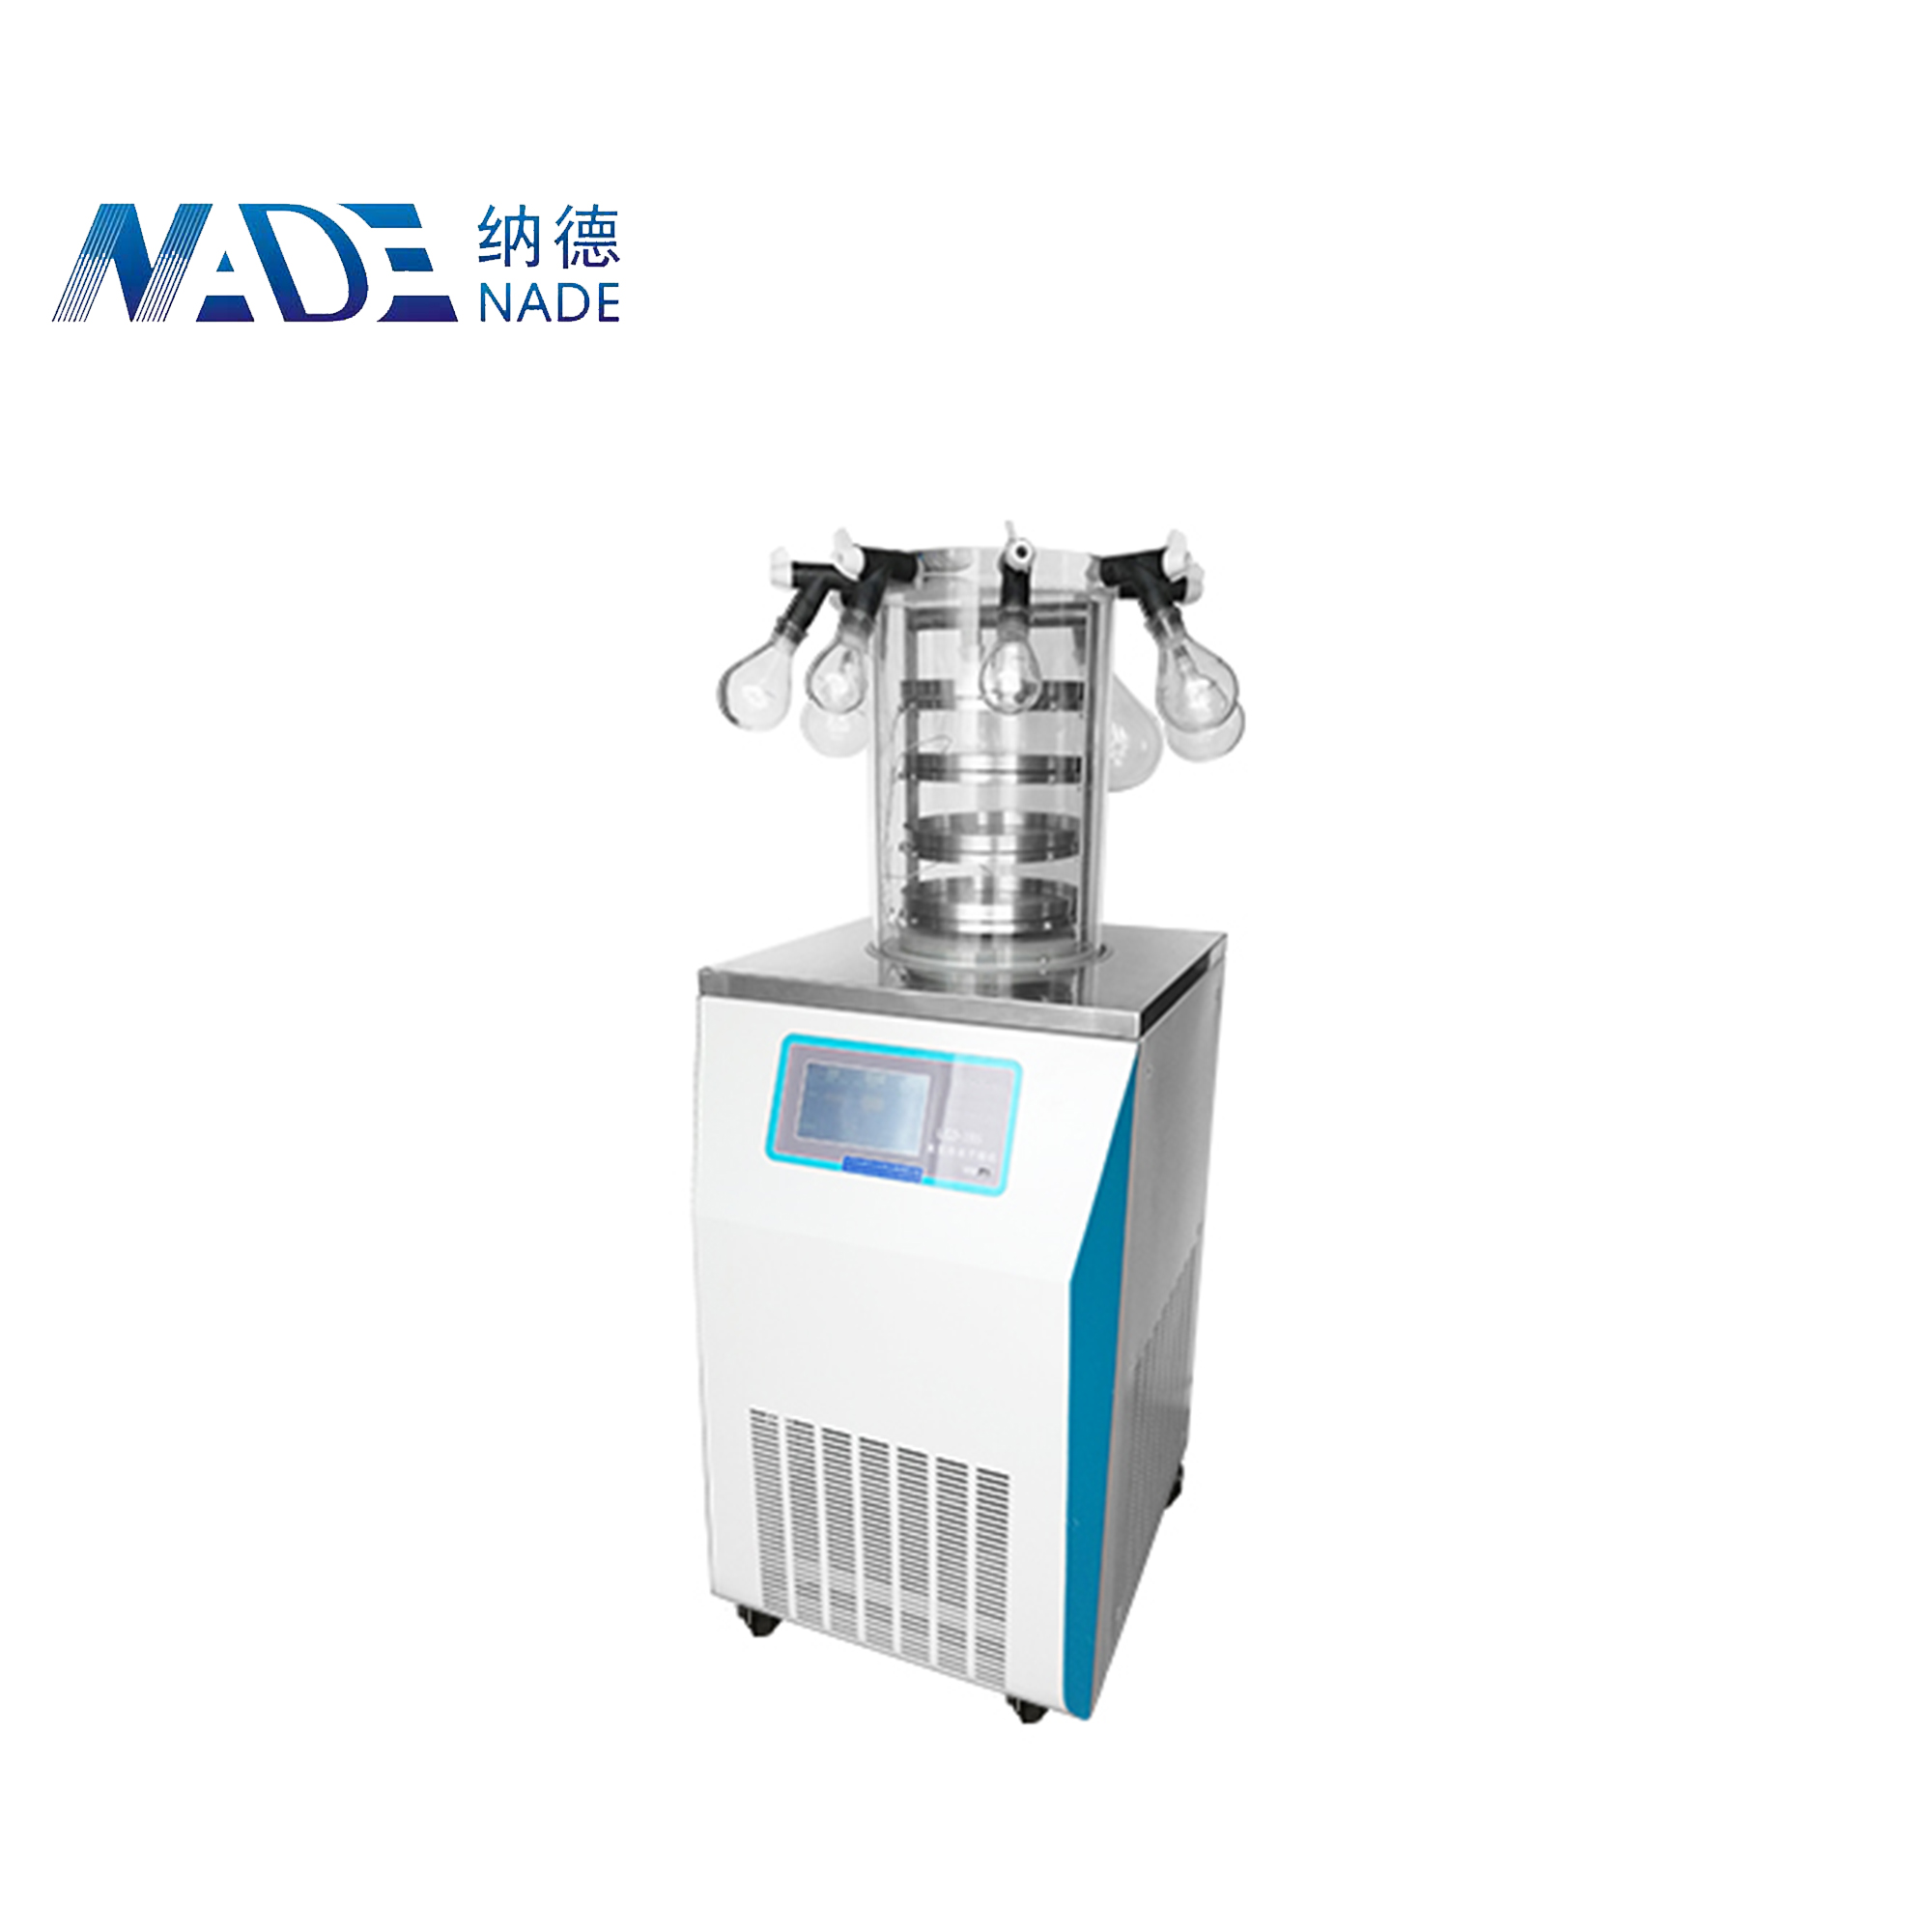 NADE LGJ-18SC Multi-Manifold Standard Type Experimental Electric-heating Lyophilizer/freeze drying equipment/freeze dryer